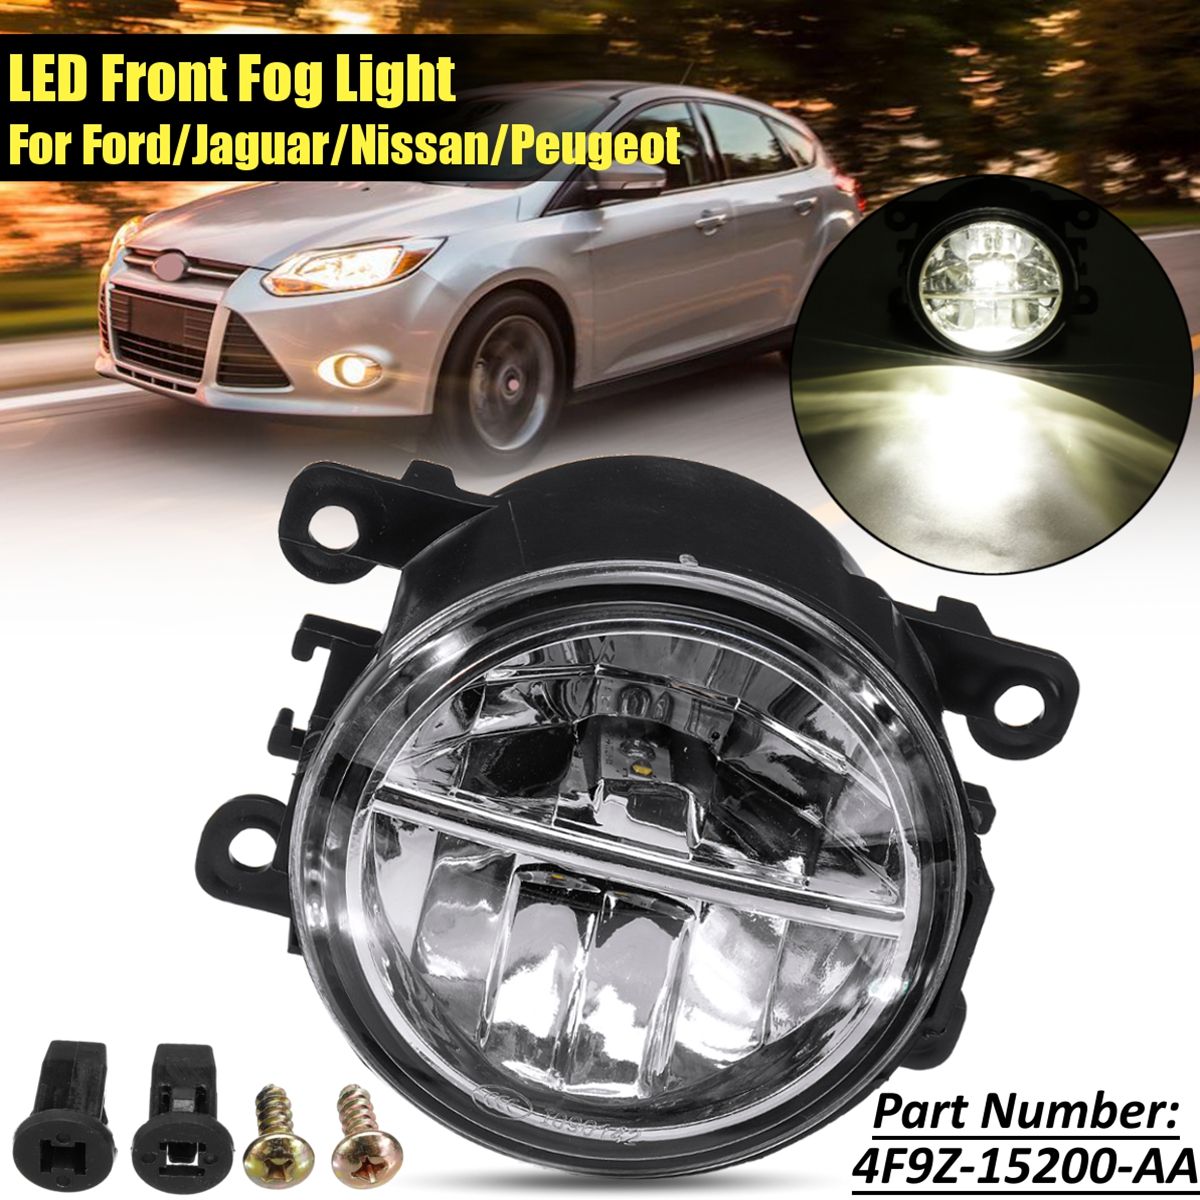 Car-LED-Front-Fog-Lights-White-4F9Z15200AA-For-Ford-Fiesta-C-Max-Focus-Fusion-Transit-Jaguar-Nissan--1559482